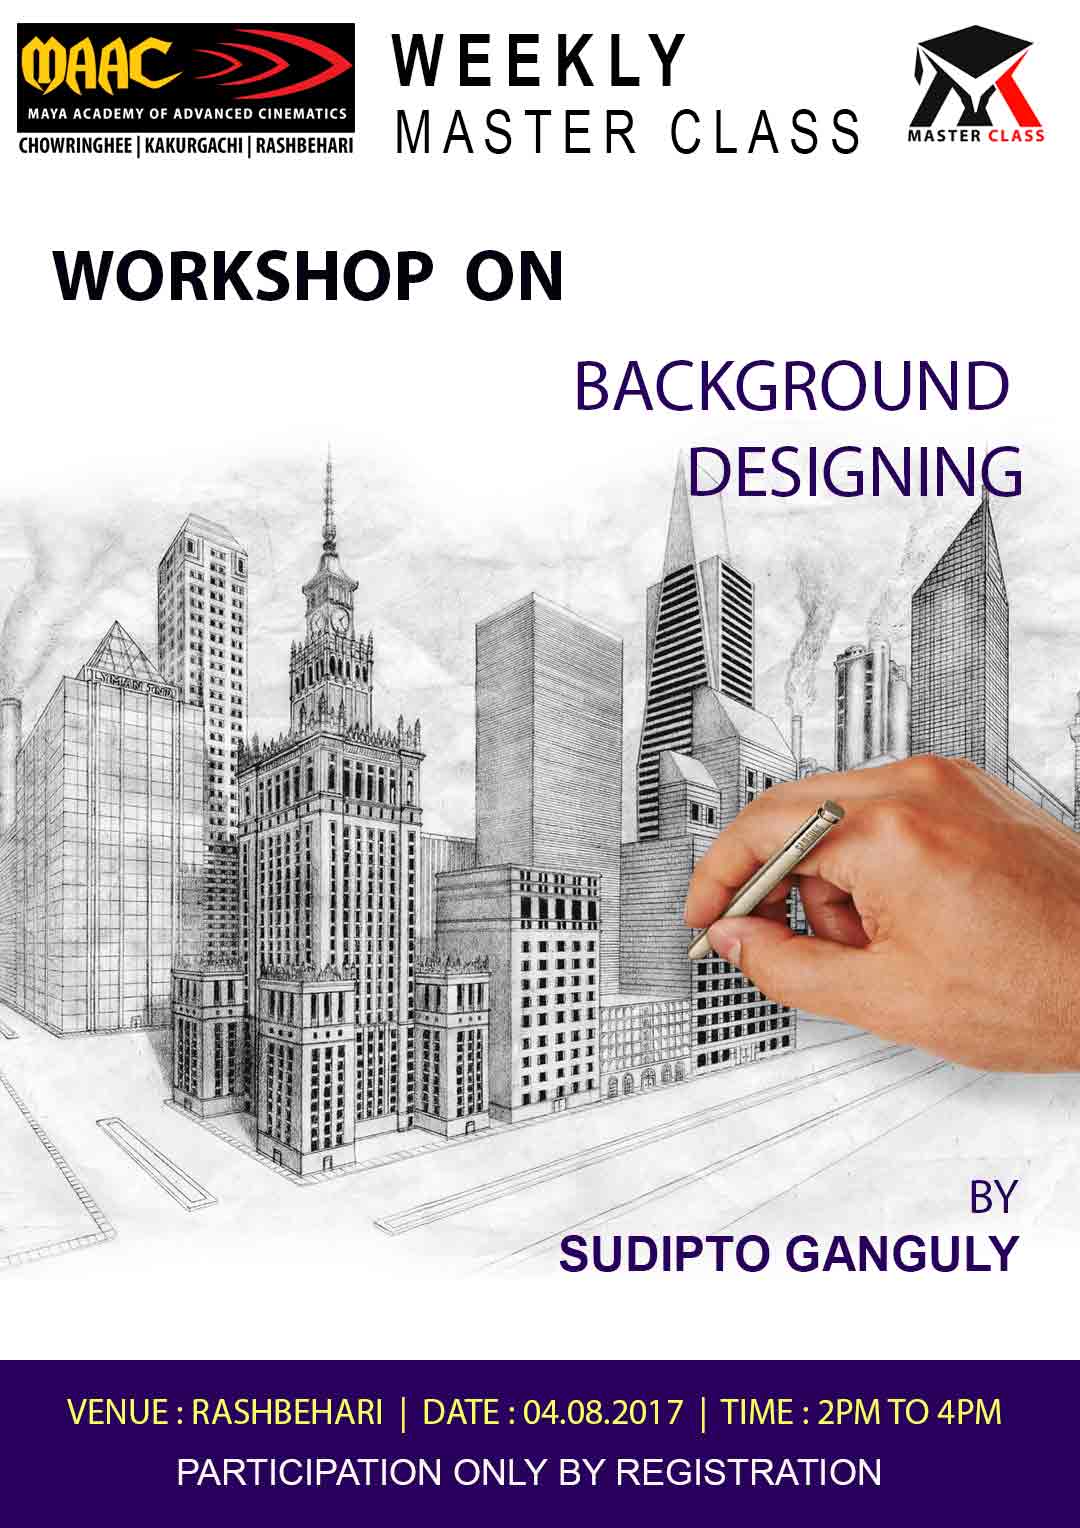 Weekly Master Class on Background Designing - Sudipto Ganguly